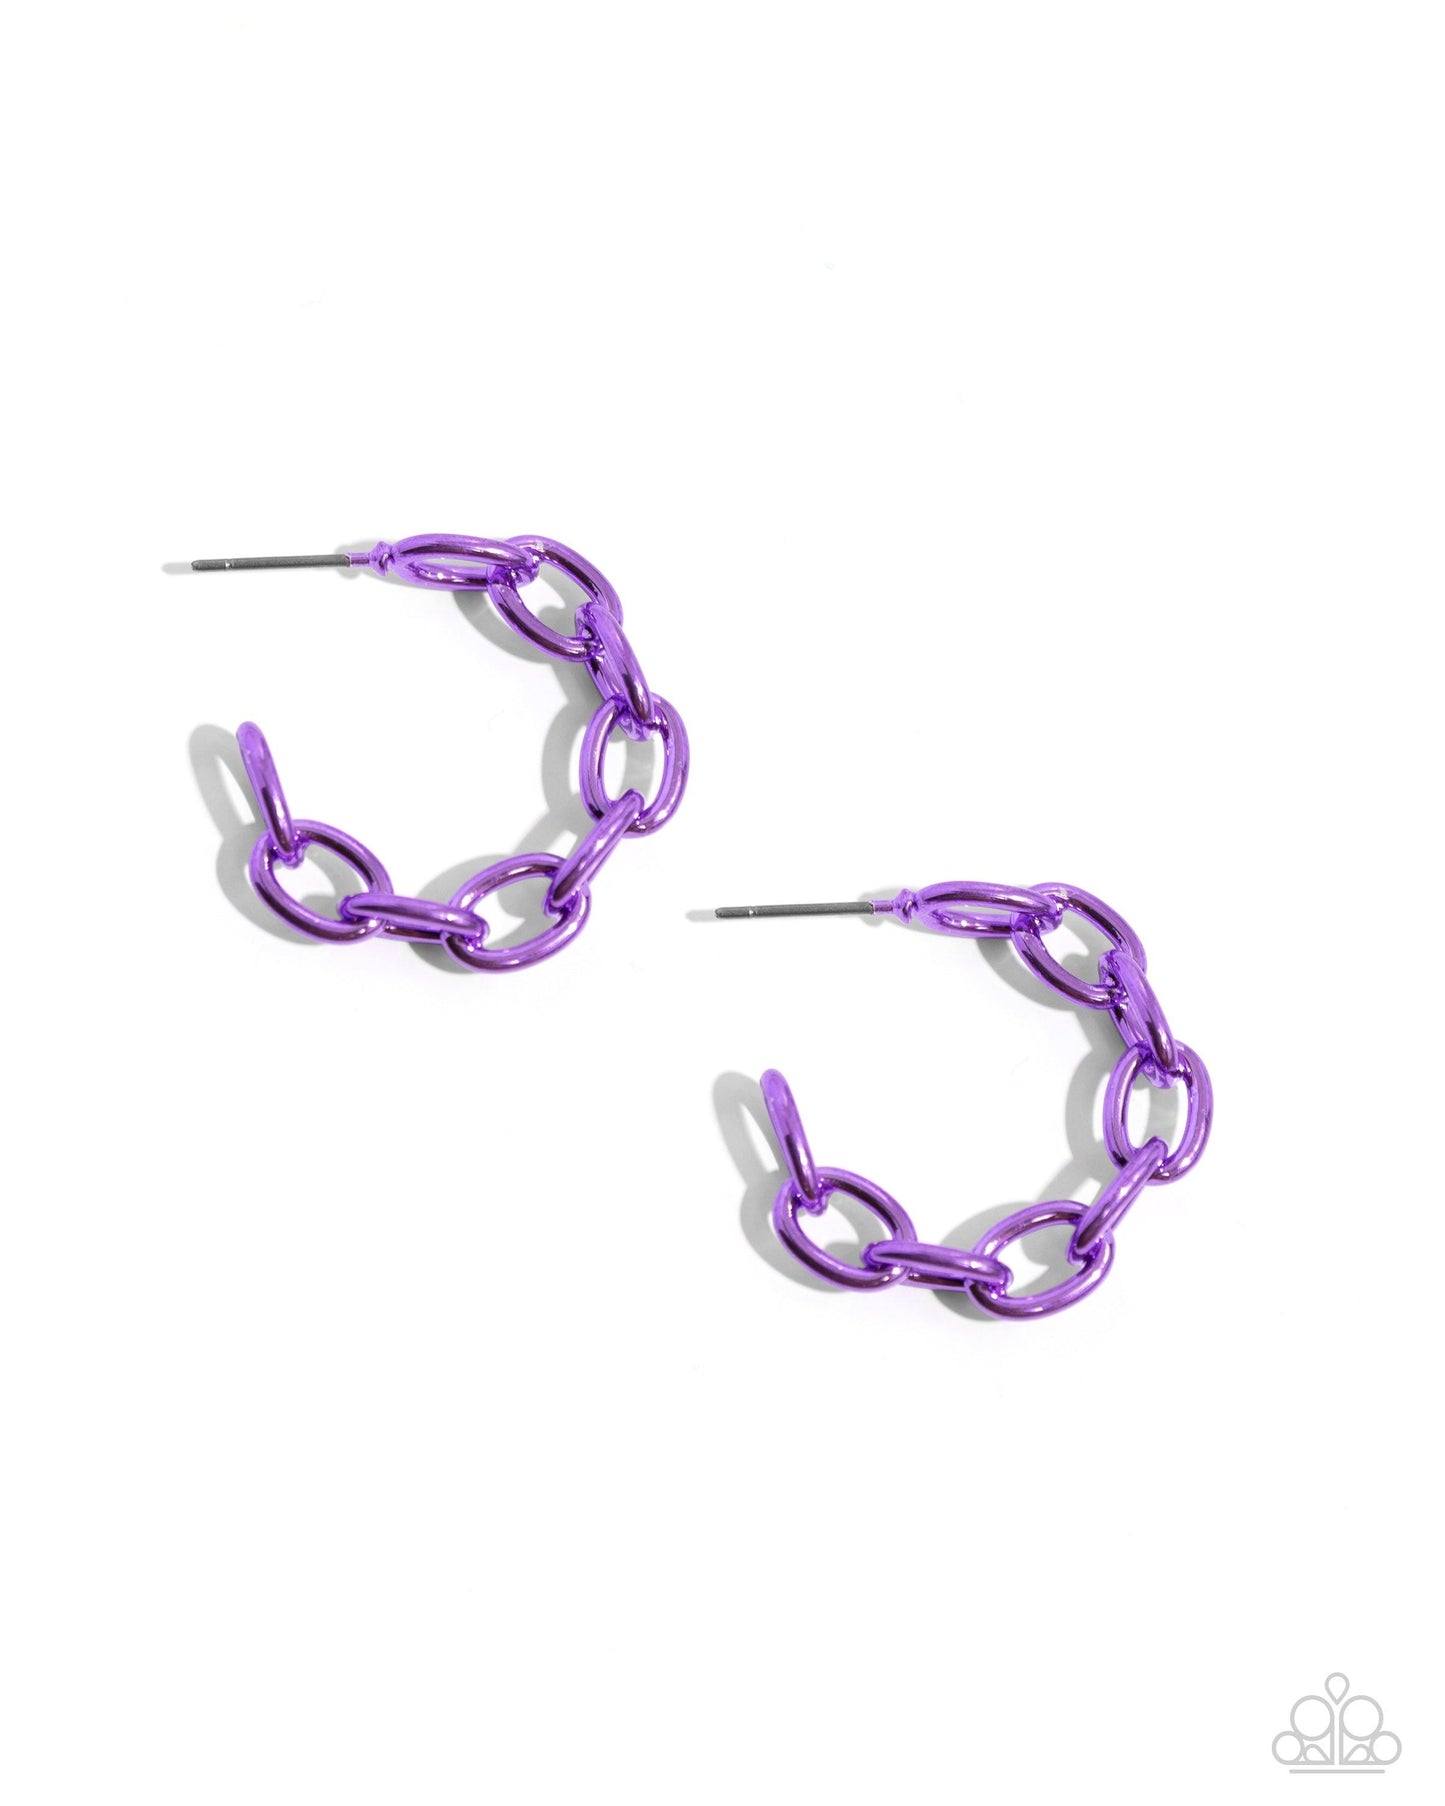 Paparazzi Accessories - Colorful Cameo - Purple Hoop Earrings - Bling by JessieK